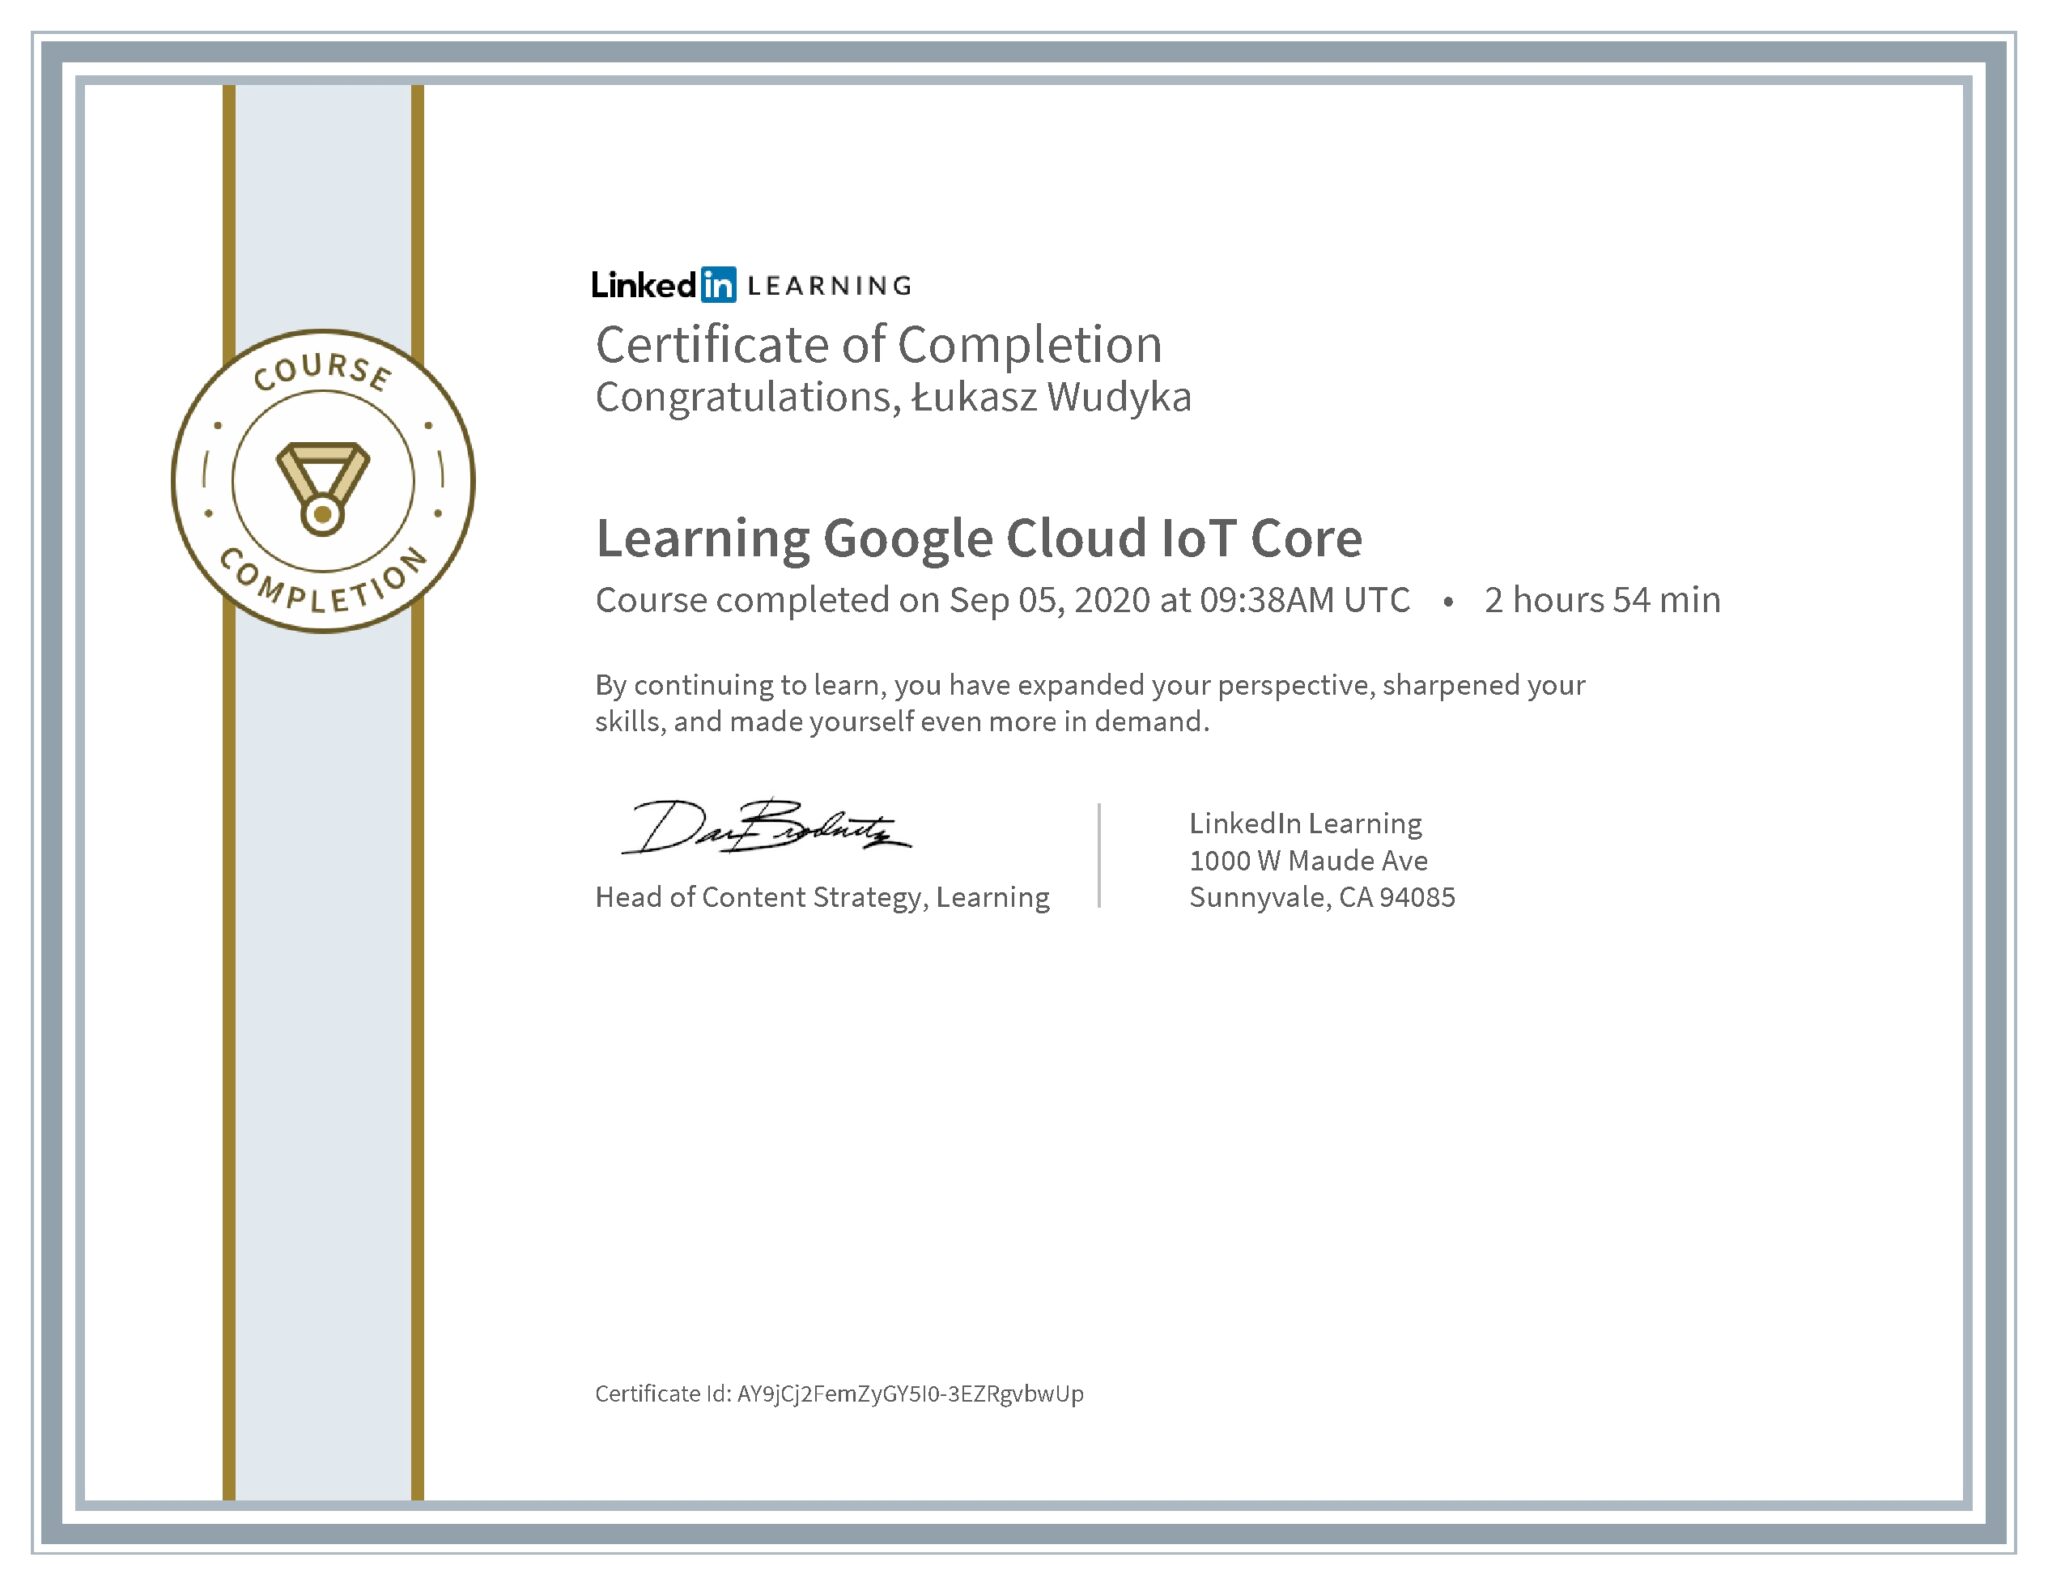 Łukasz Wudyka certyfikat LinkedIn Learning Google Cloud IoT Core